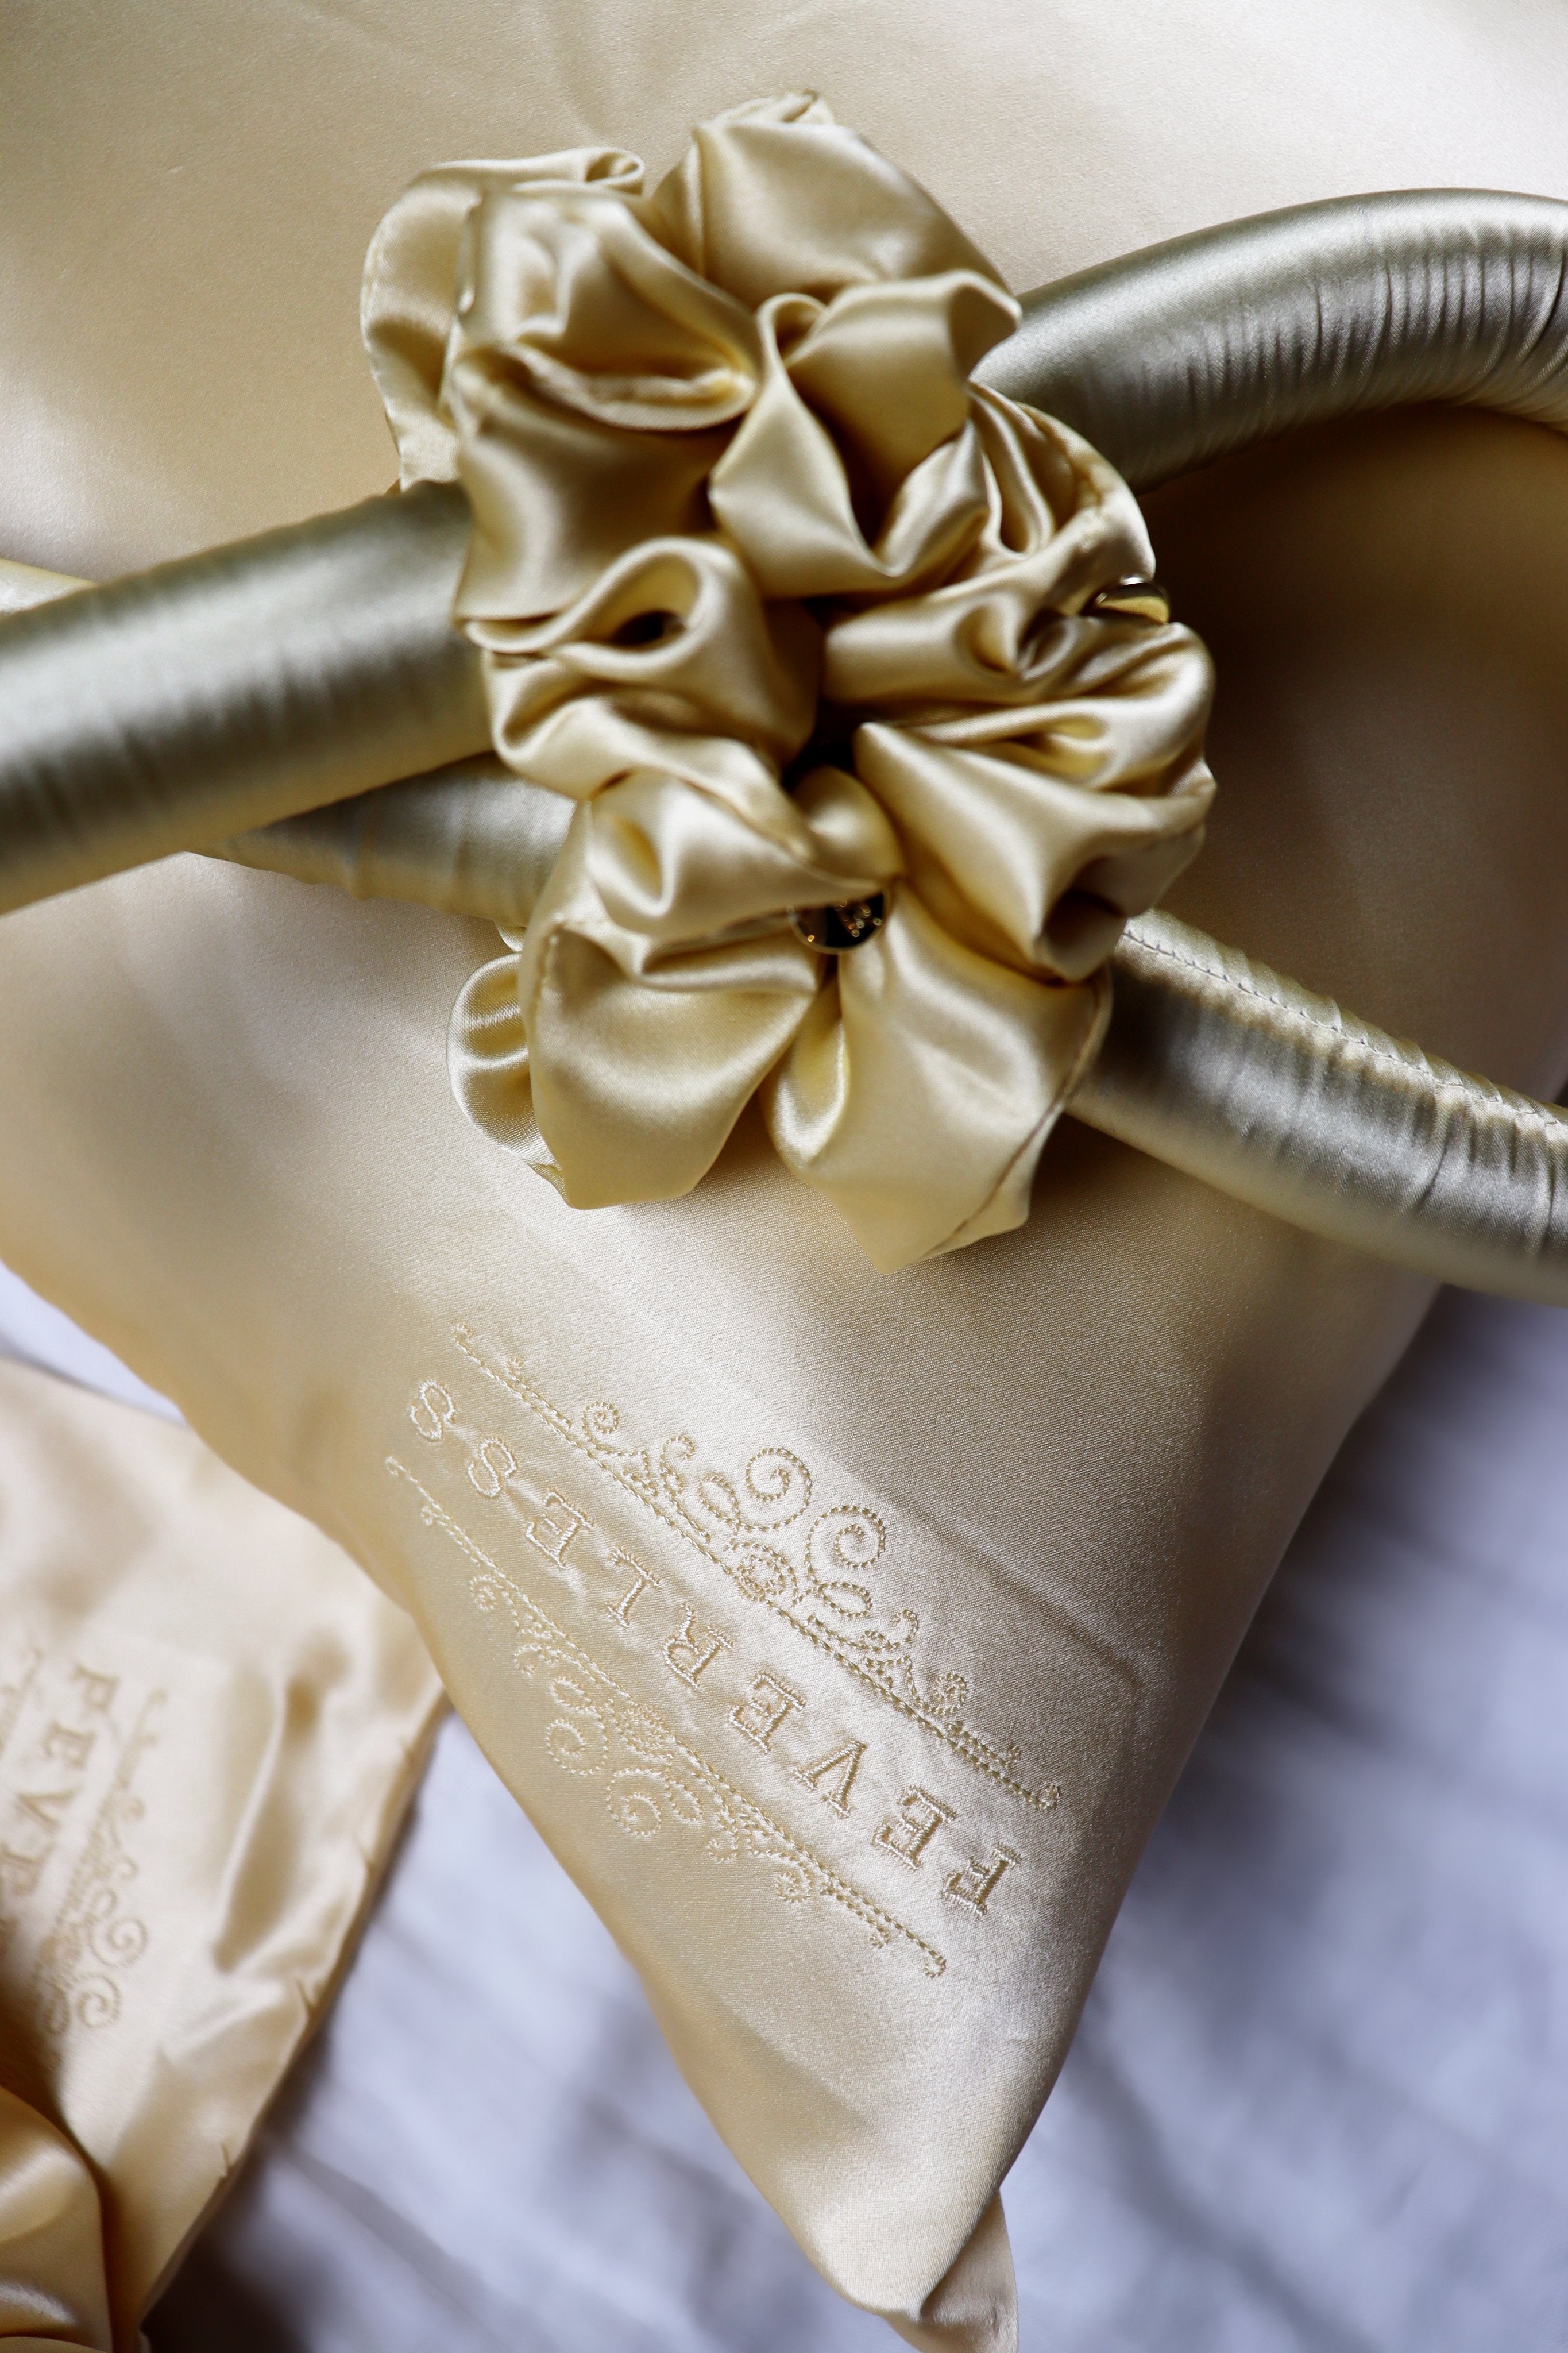 Glowing Hair & Skin SET - XXS Size Curling Kit + 1 FeverLess Pillowcase in Golden Natural Silk